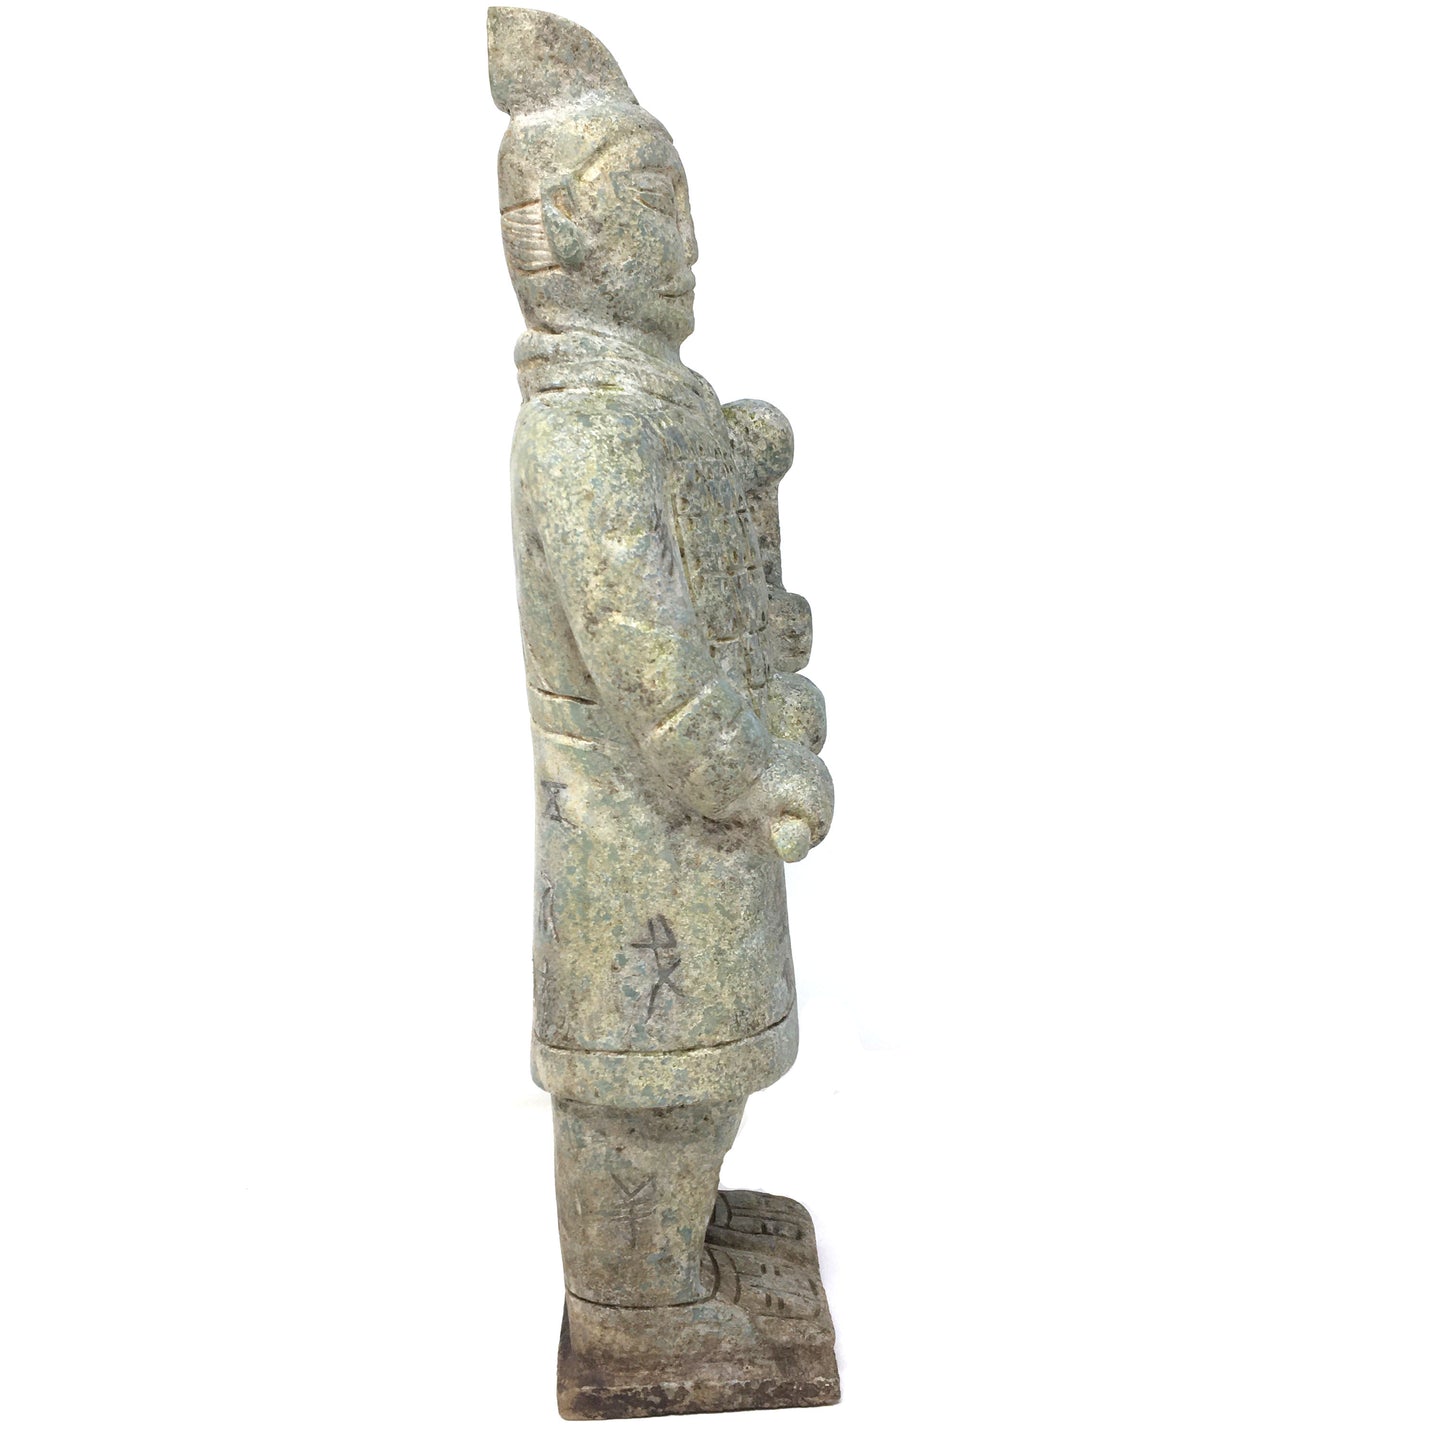 Stone Terracotta Standing Chinese China Warrior Soldier Guard Statue Idol 13.5"